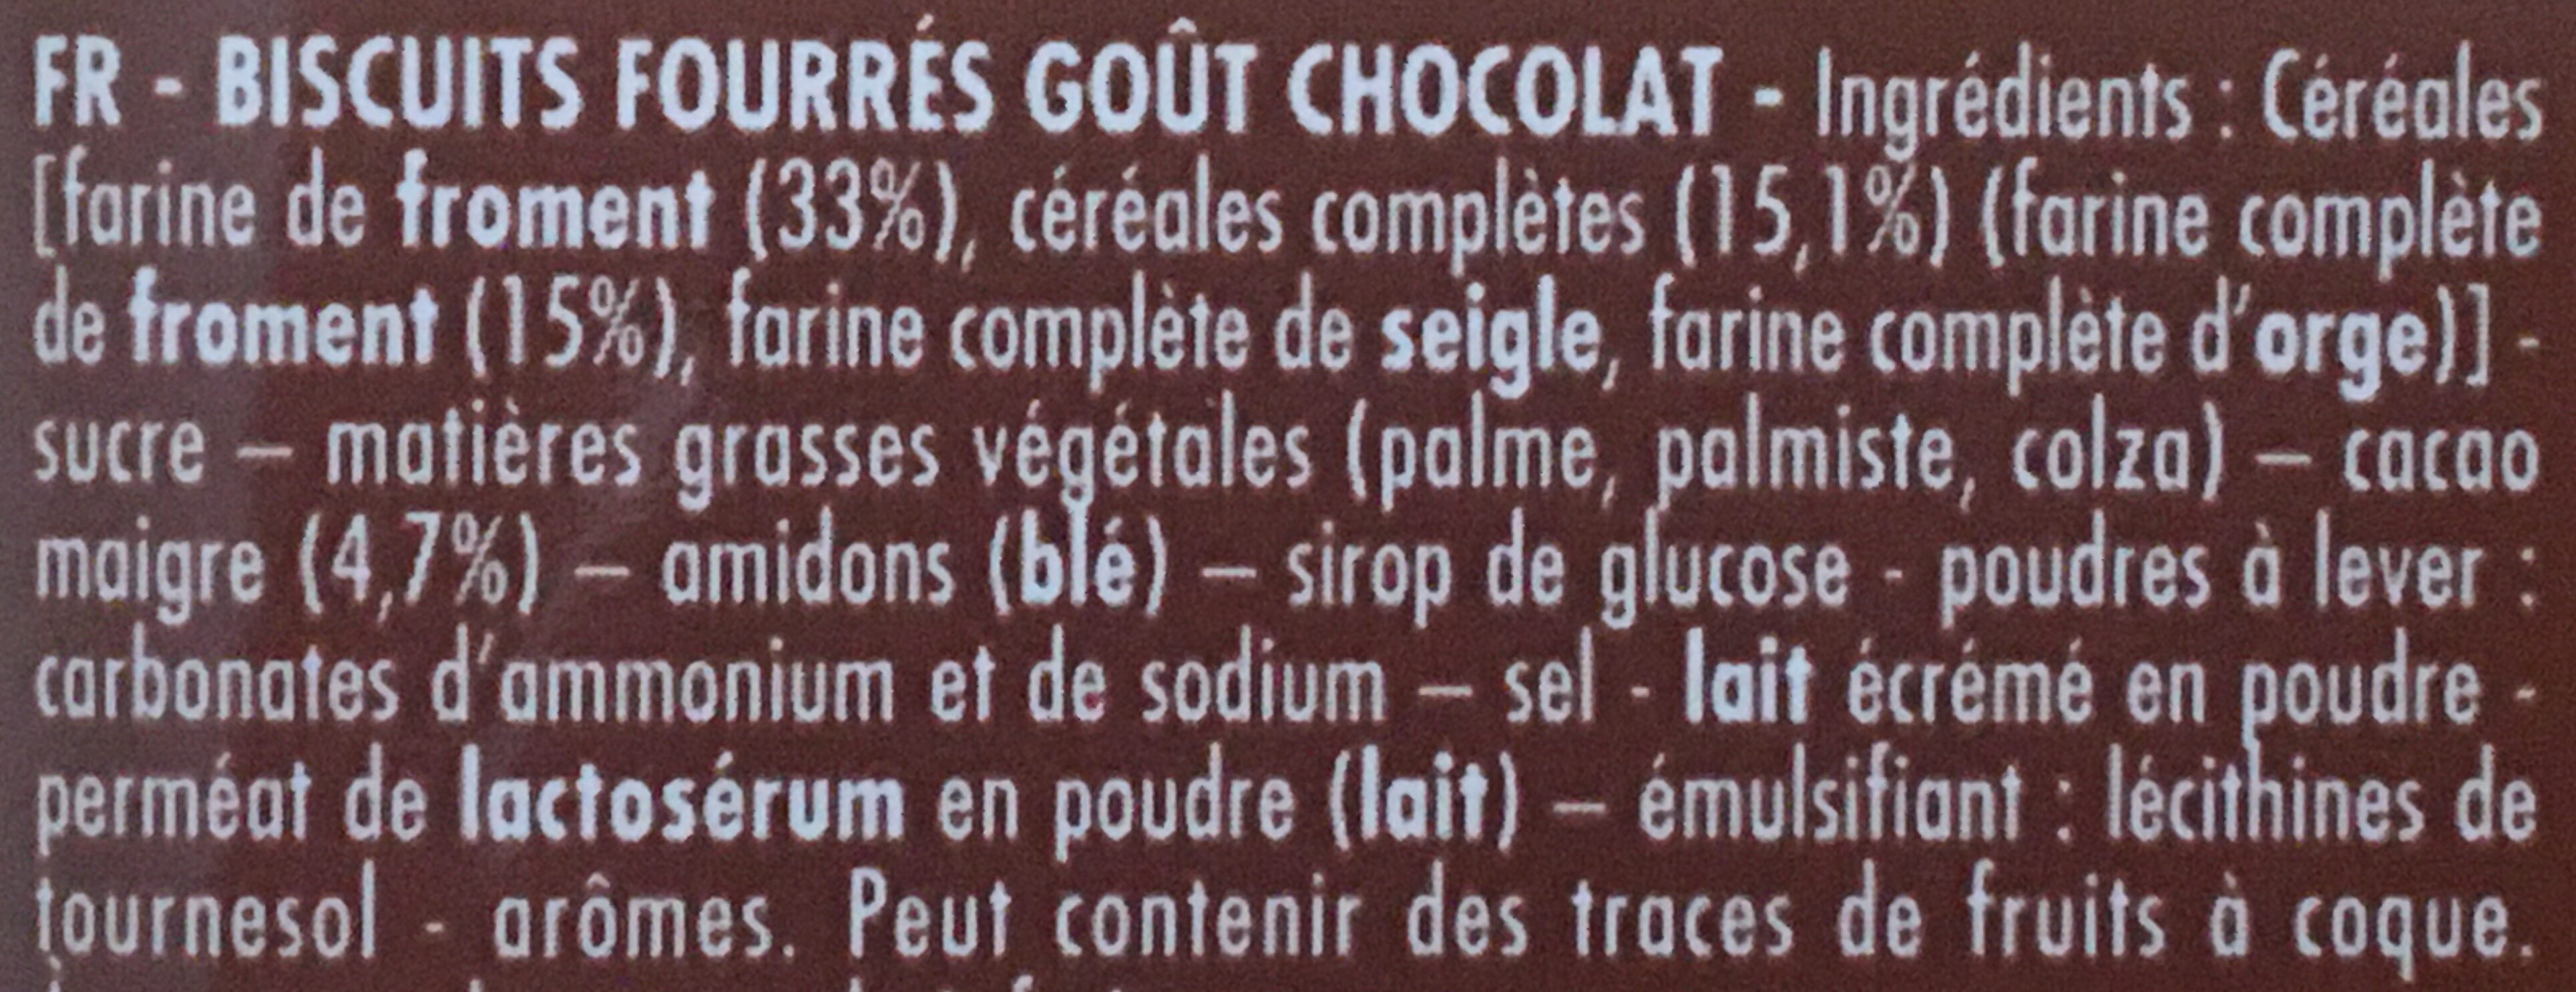 Biscuits goût chocolat - Ingredienti - fr